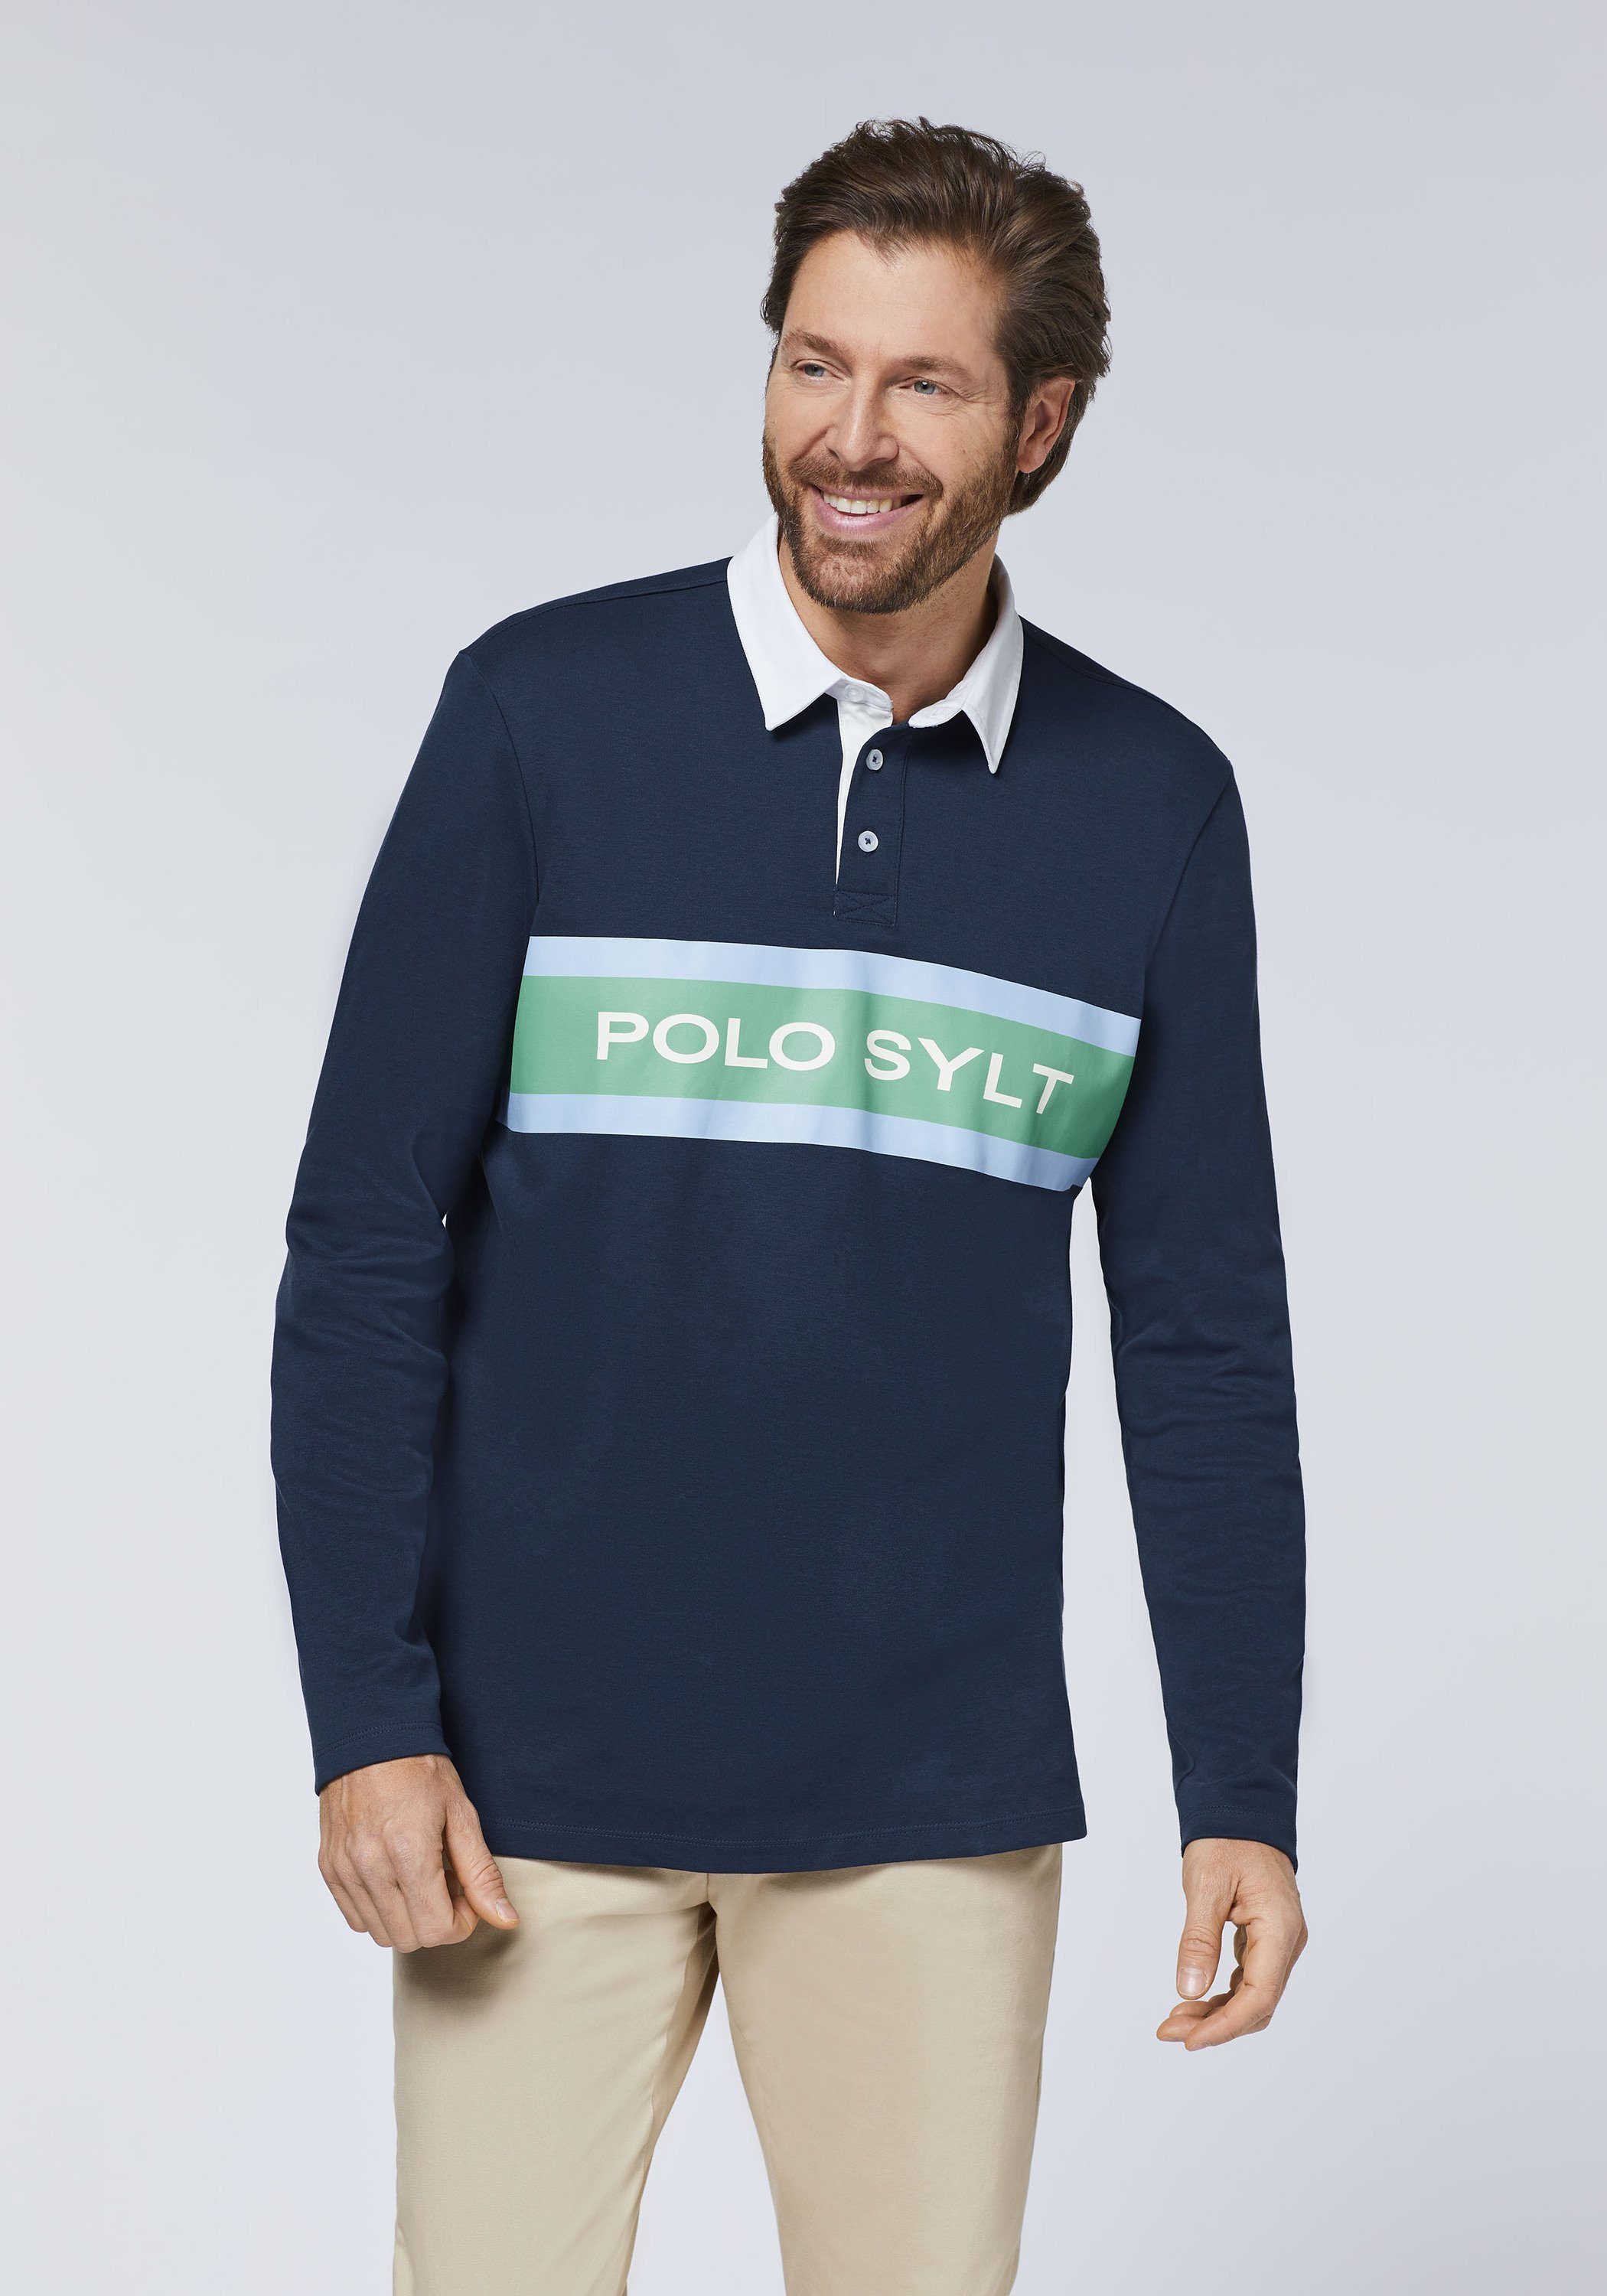 Total Sylt Polo im Poloshirt Label-Design 19-4010 Eclipse